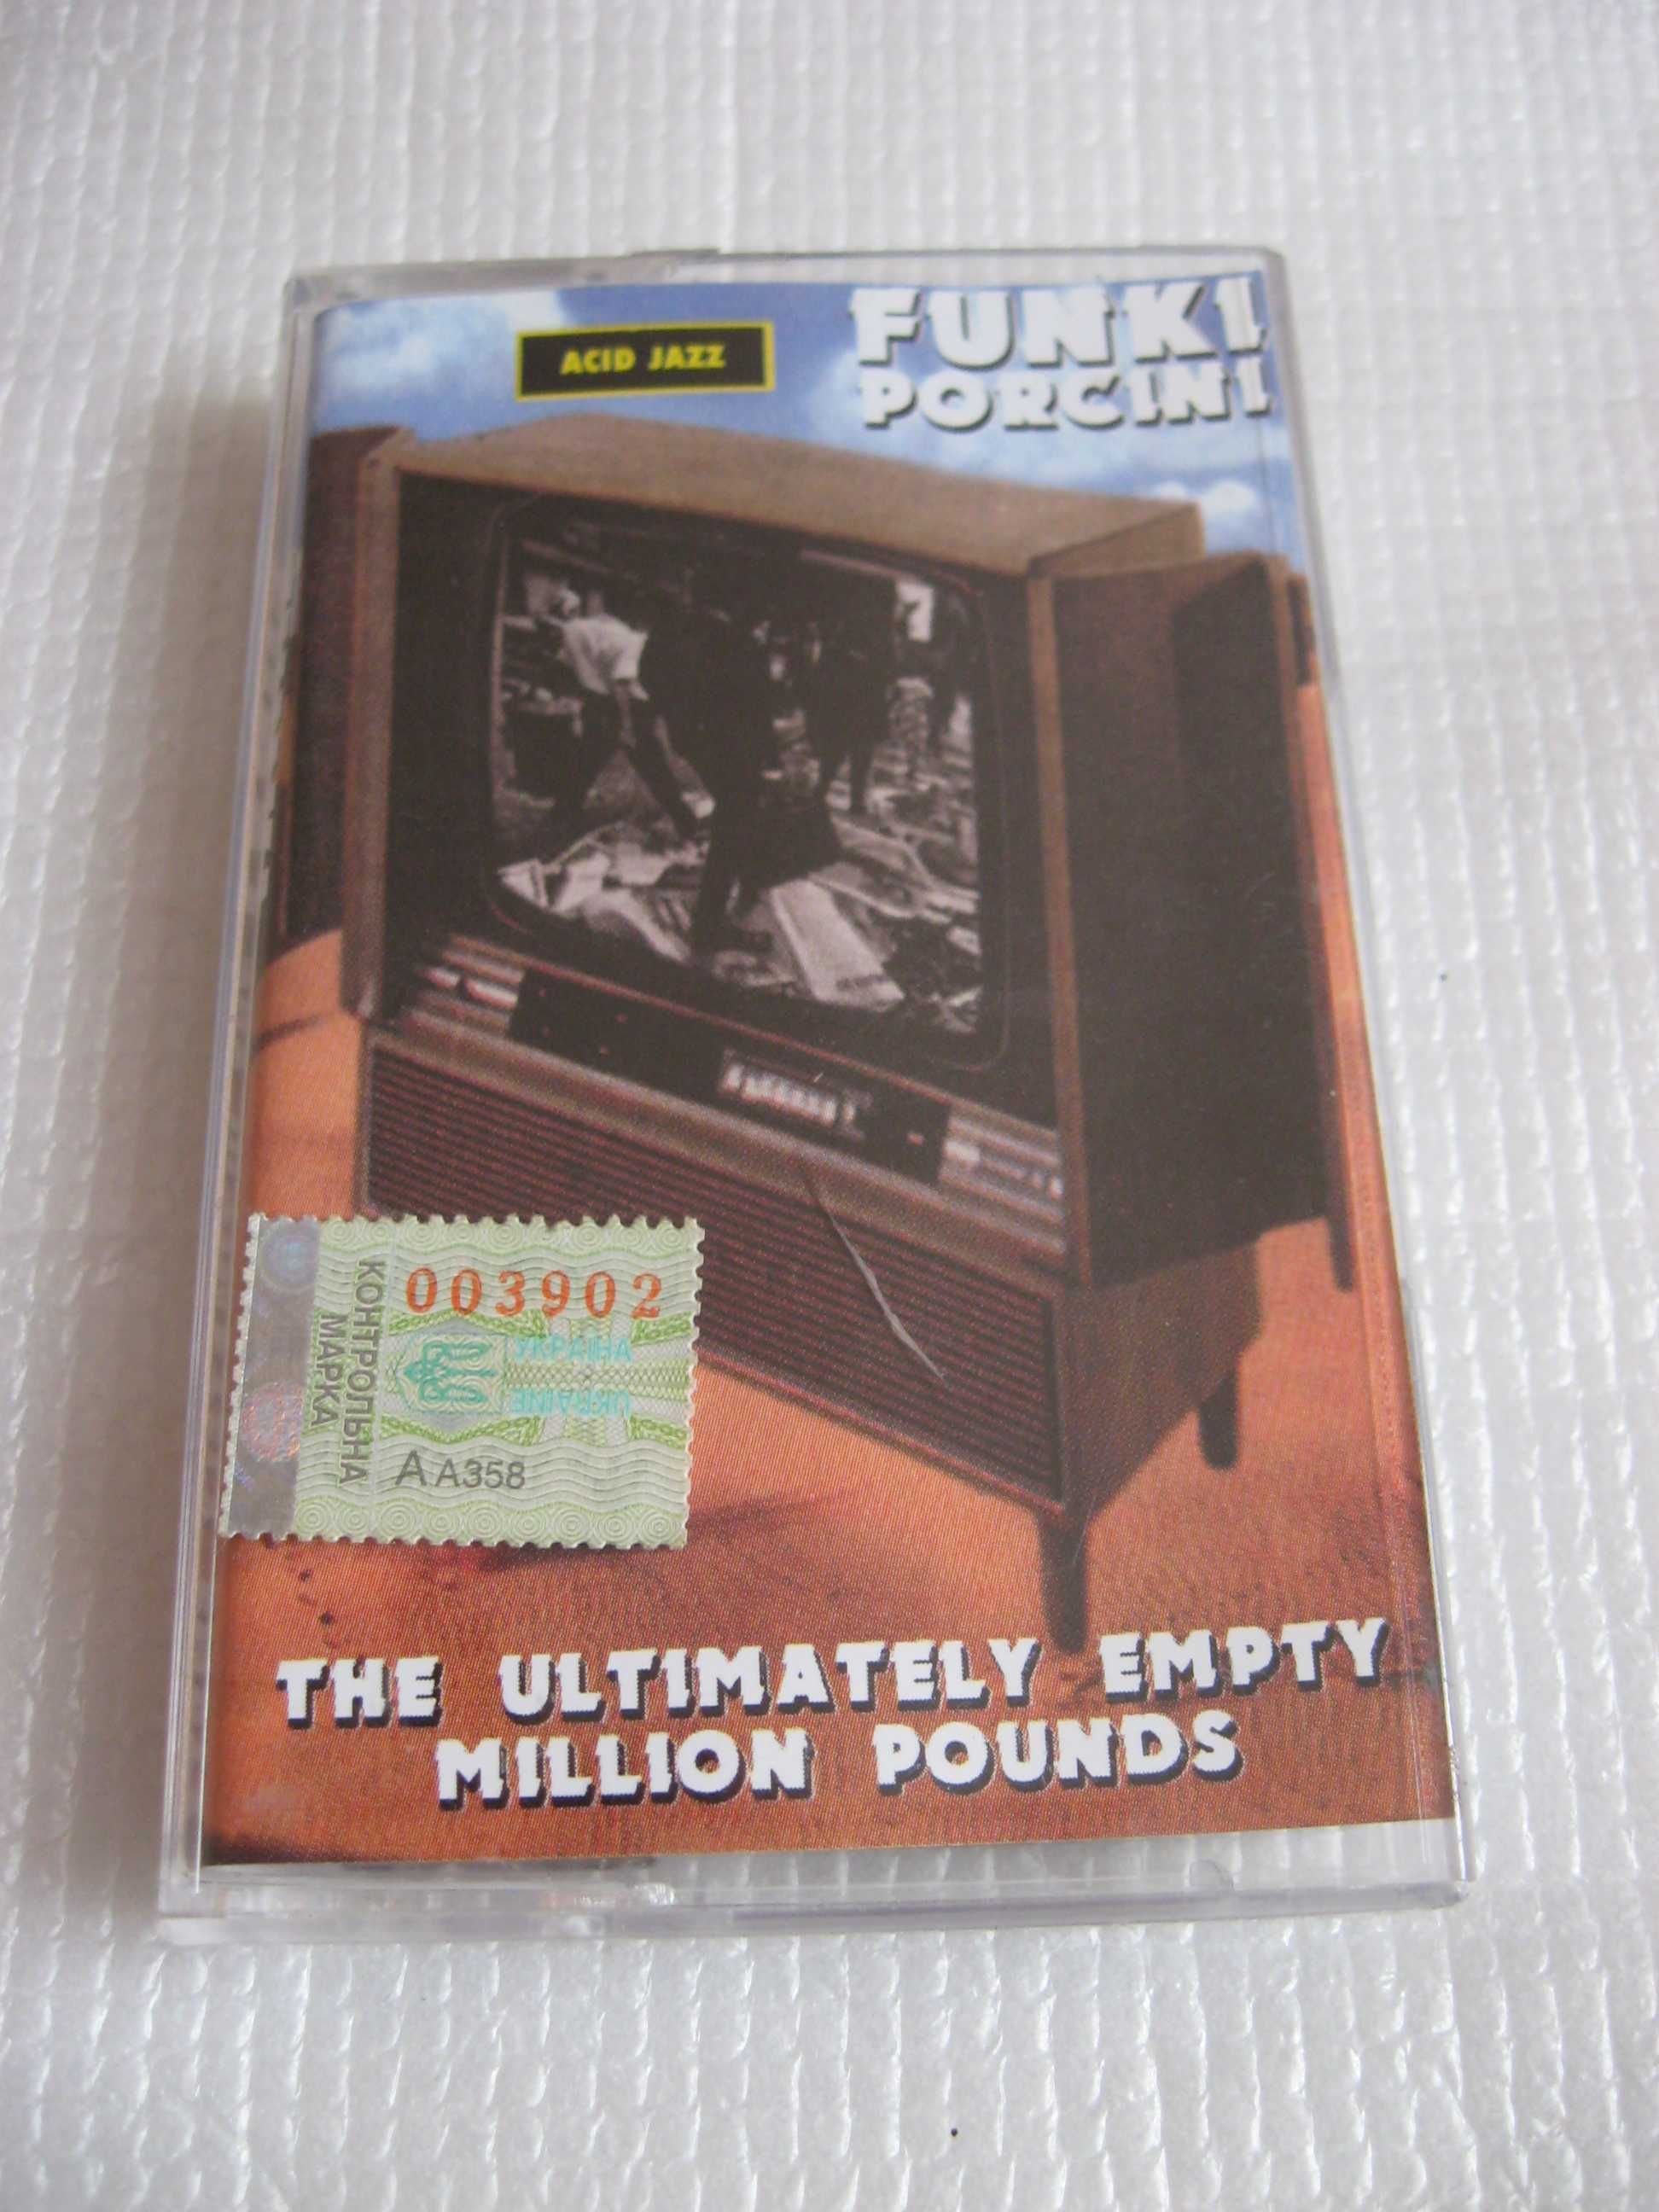 Касета Funki Porcini "The Ultimately Empty Million Pounds", 2000 MOON.